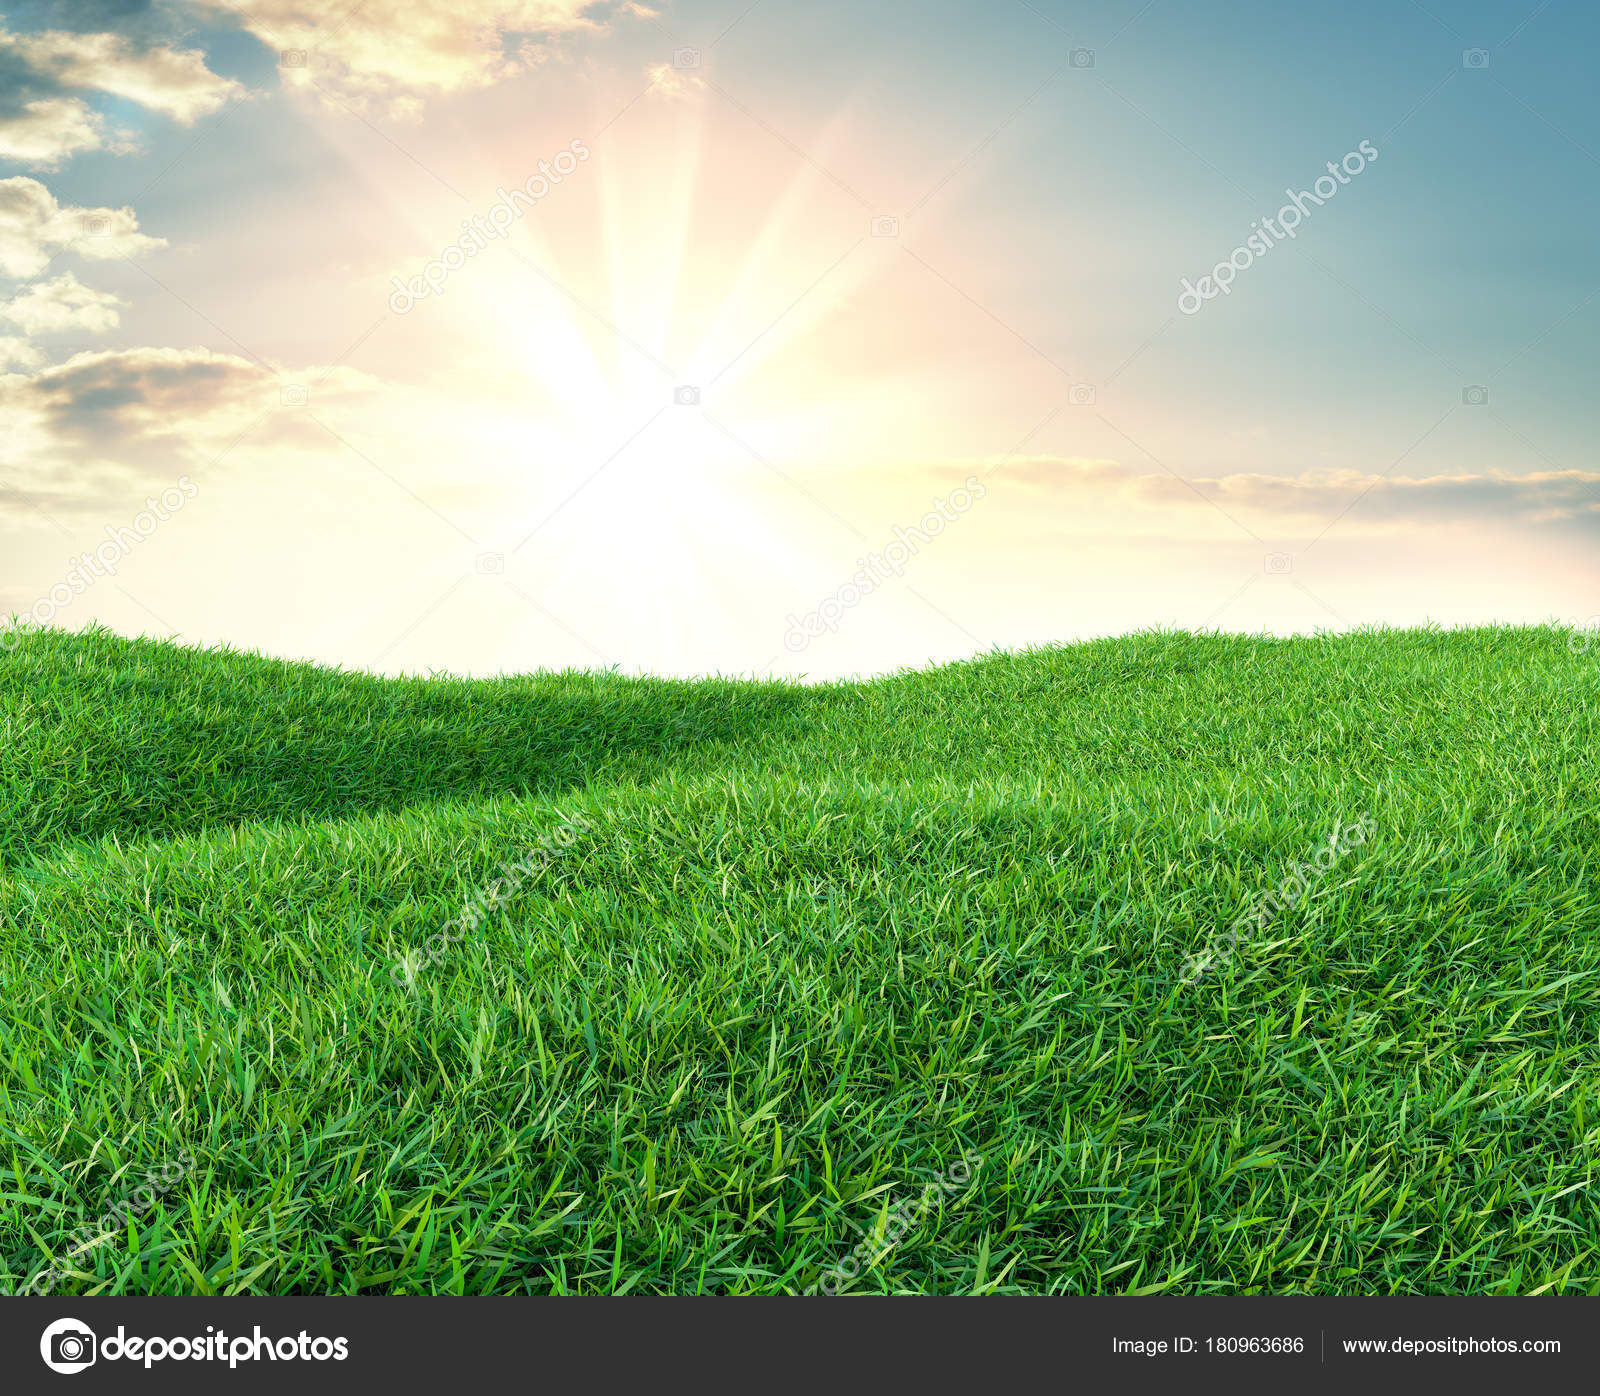 Bright grass field photo